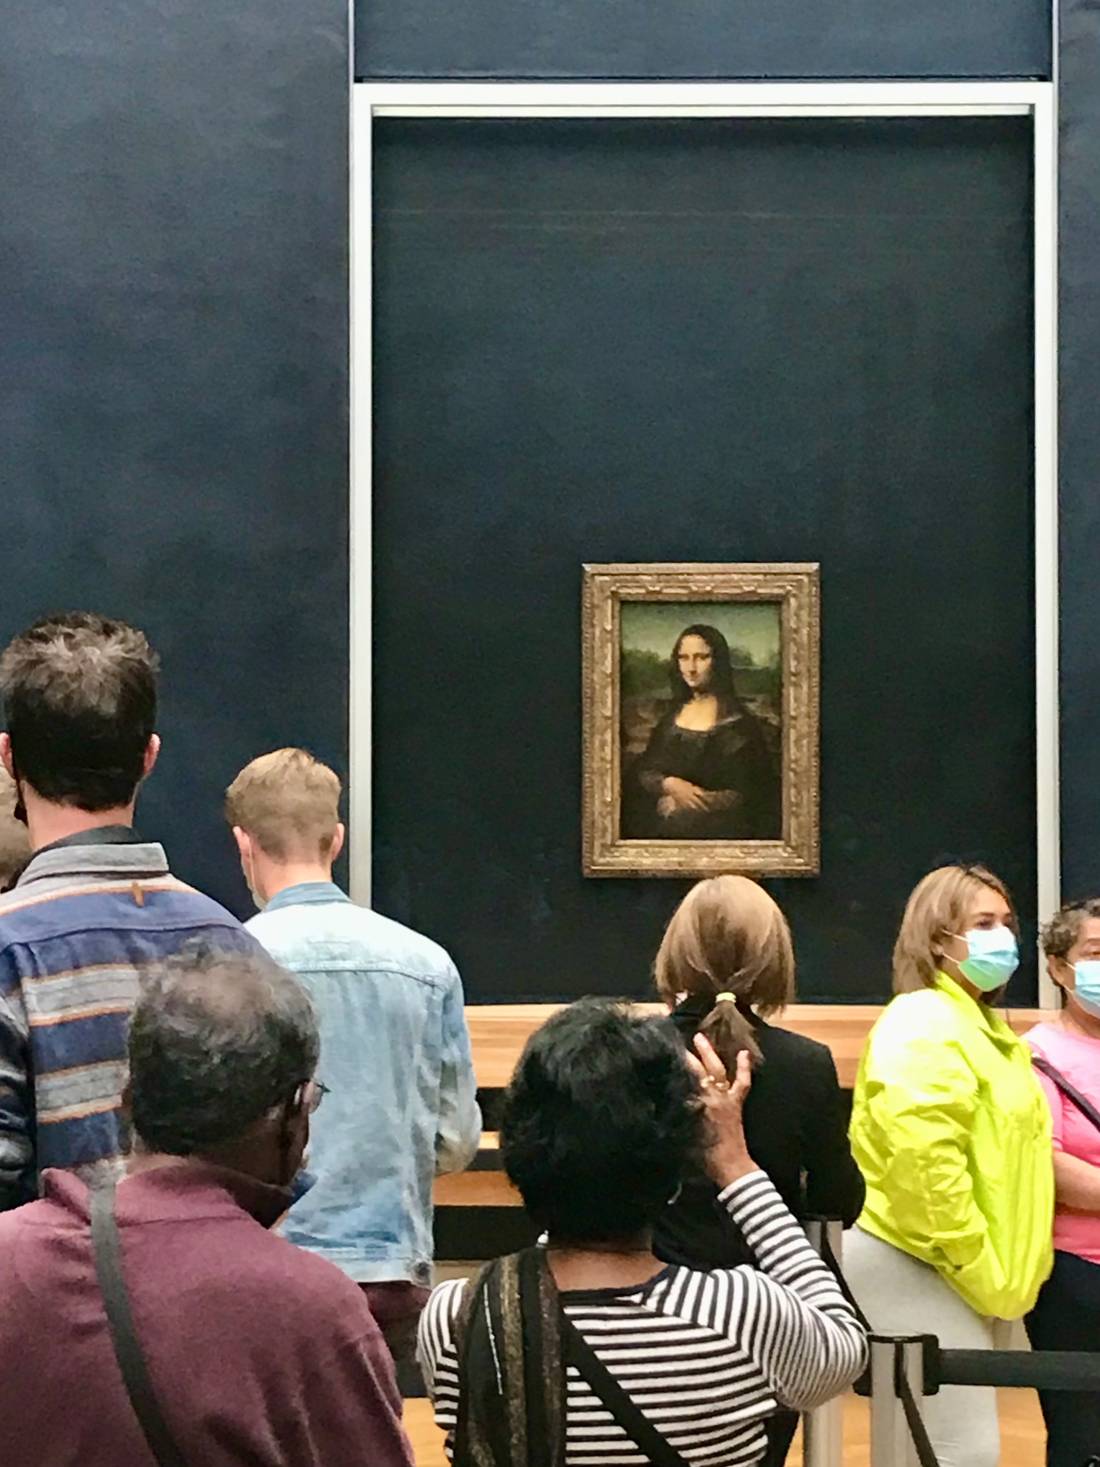 Mona Lisa - Leonardo da Vinci 1503